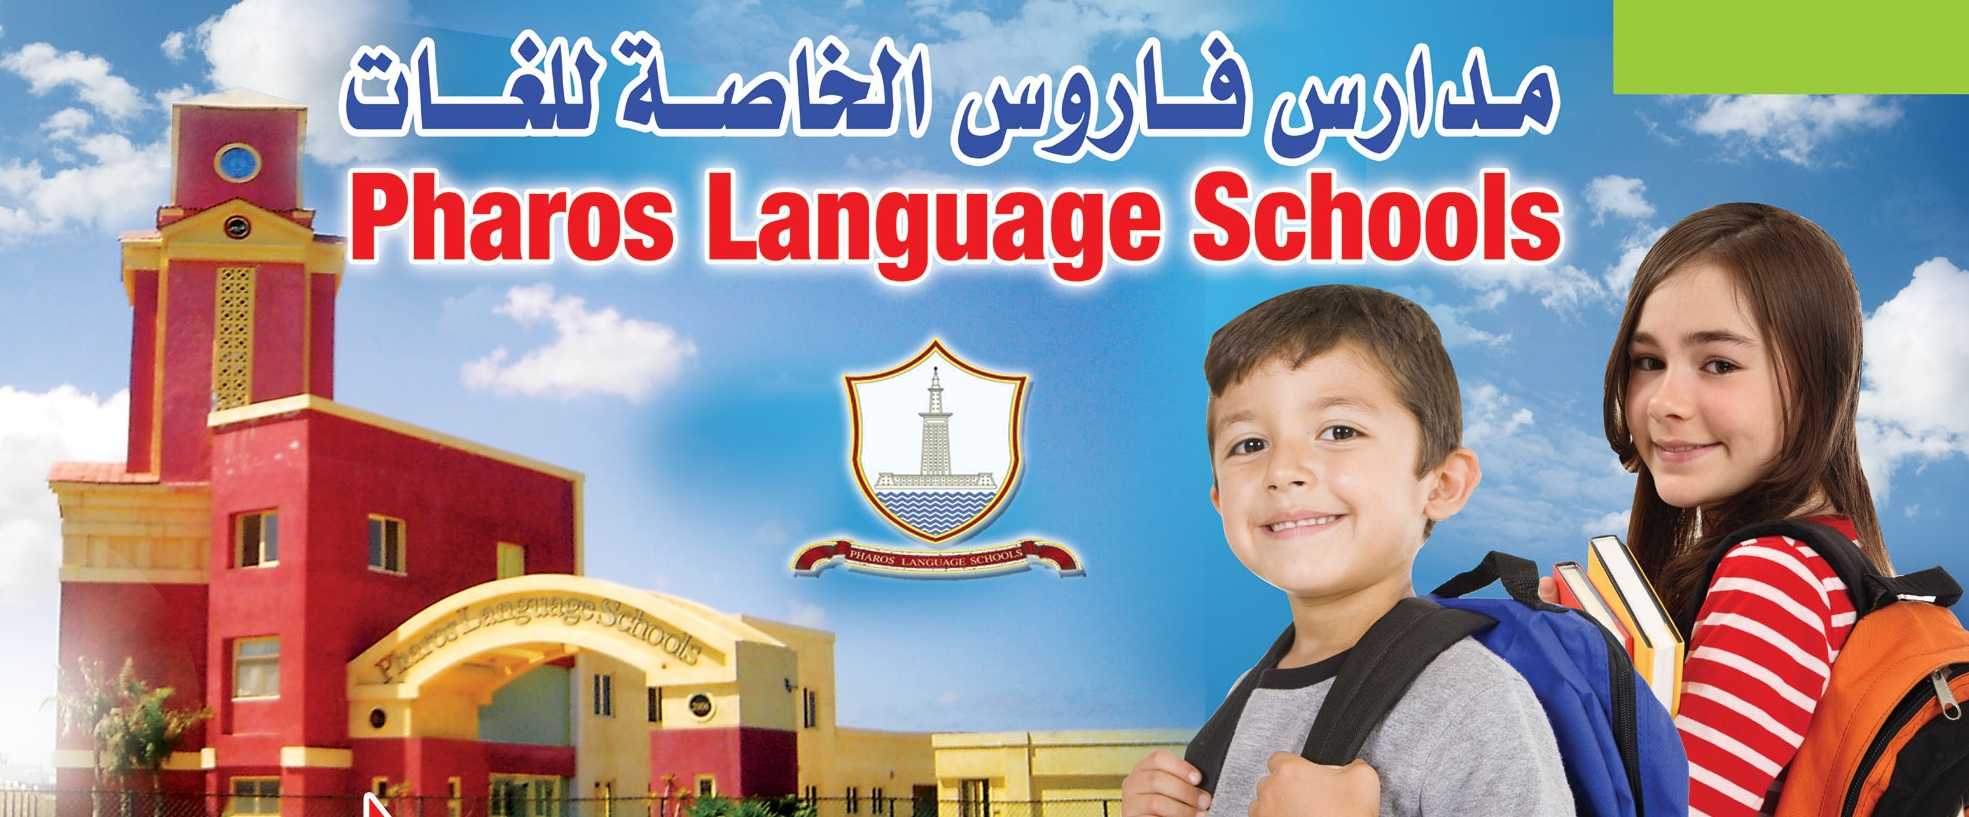 Pharos Language Schools